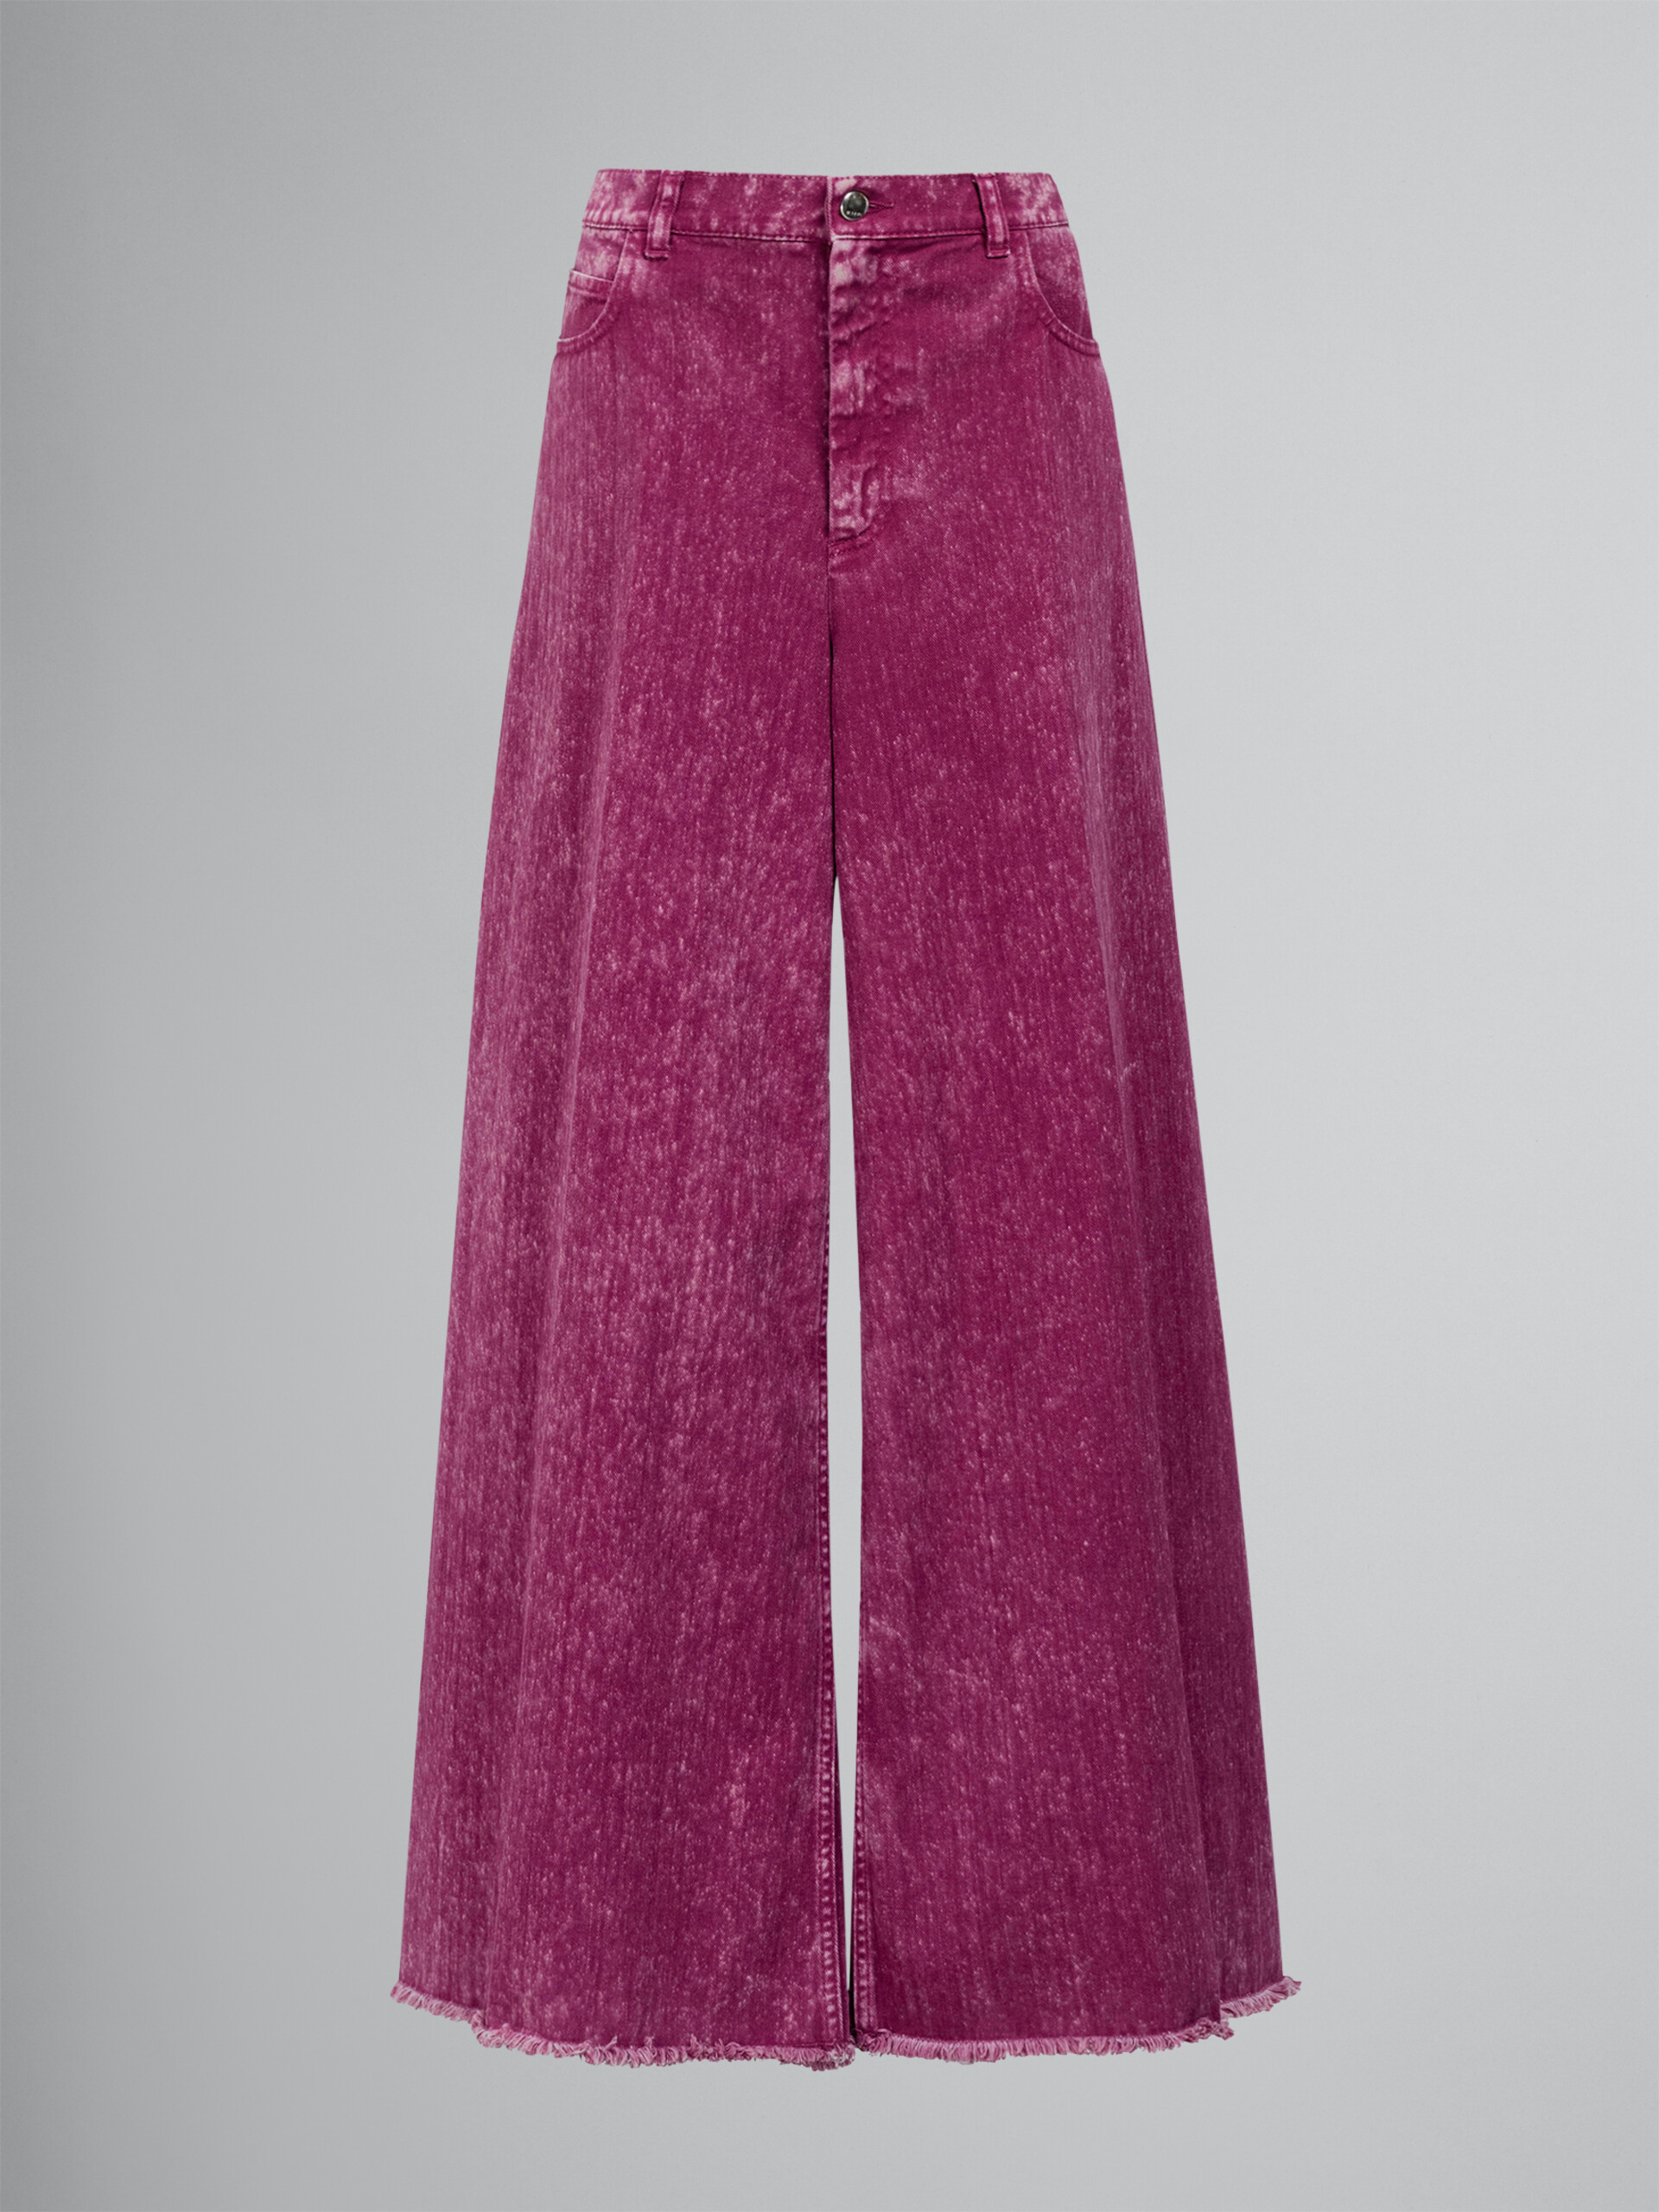 Pink denim wide-leg trousers - Pants - Image 1